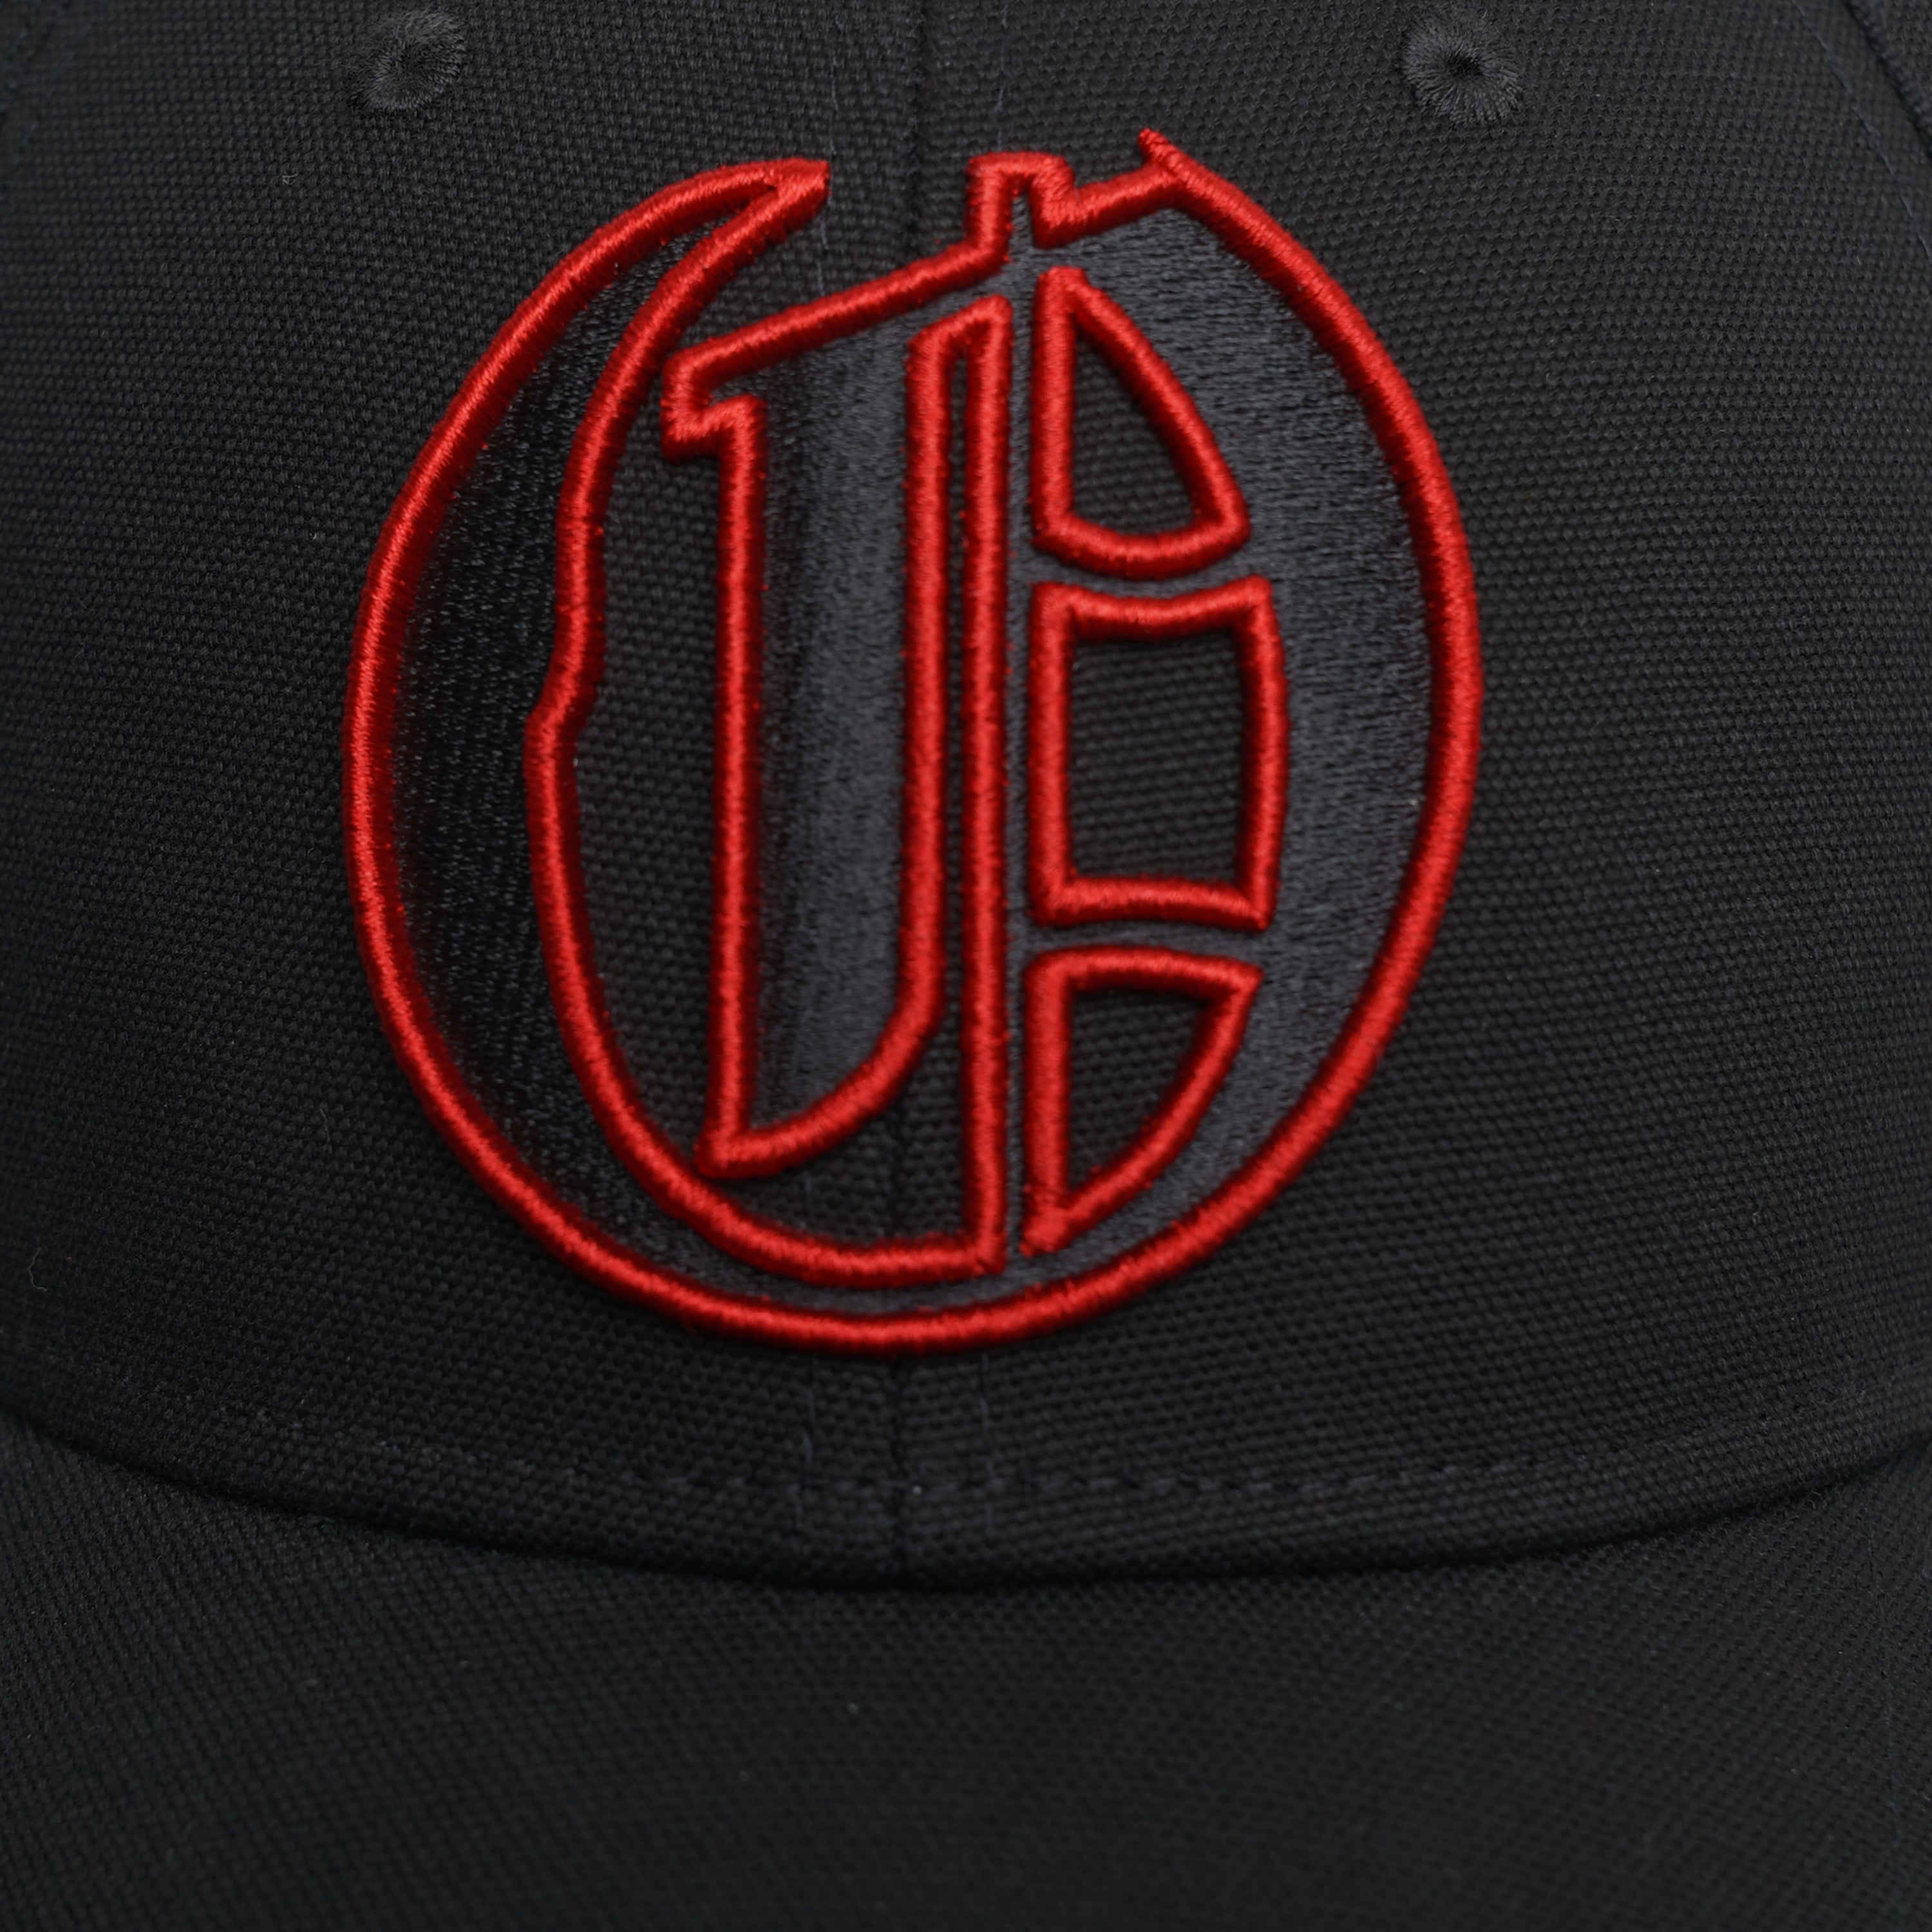 Black & Red Crew Baseball Cap